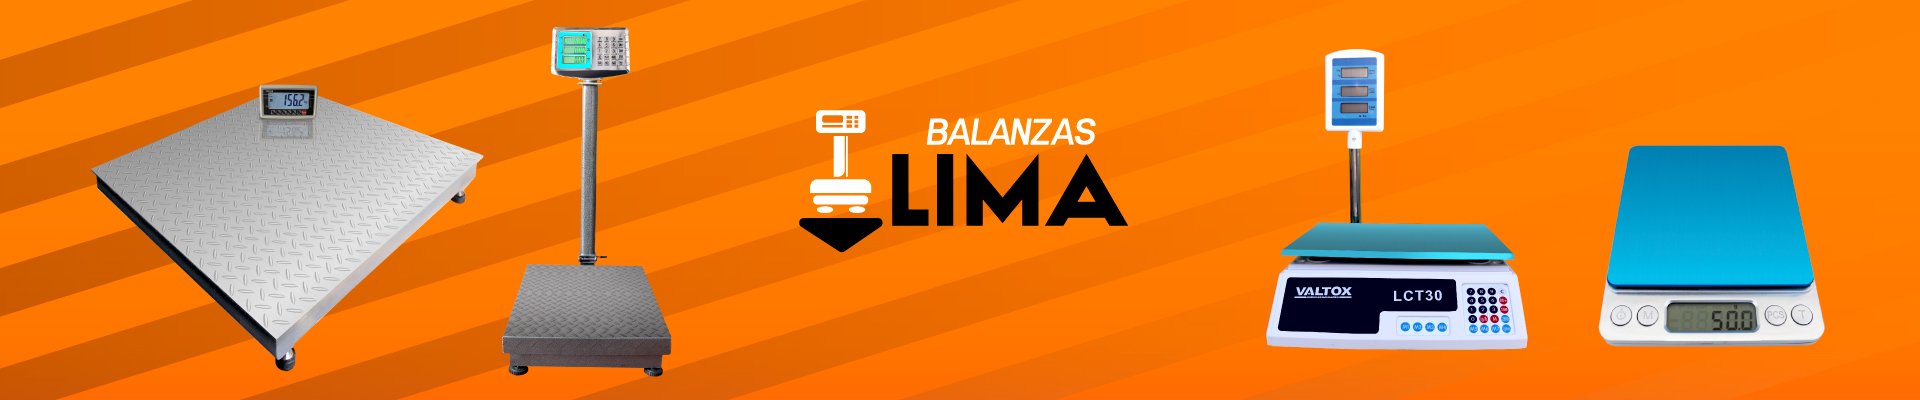 Balanzas Lima